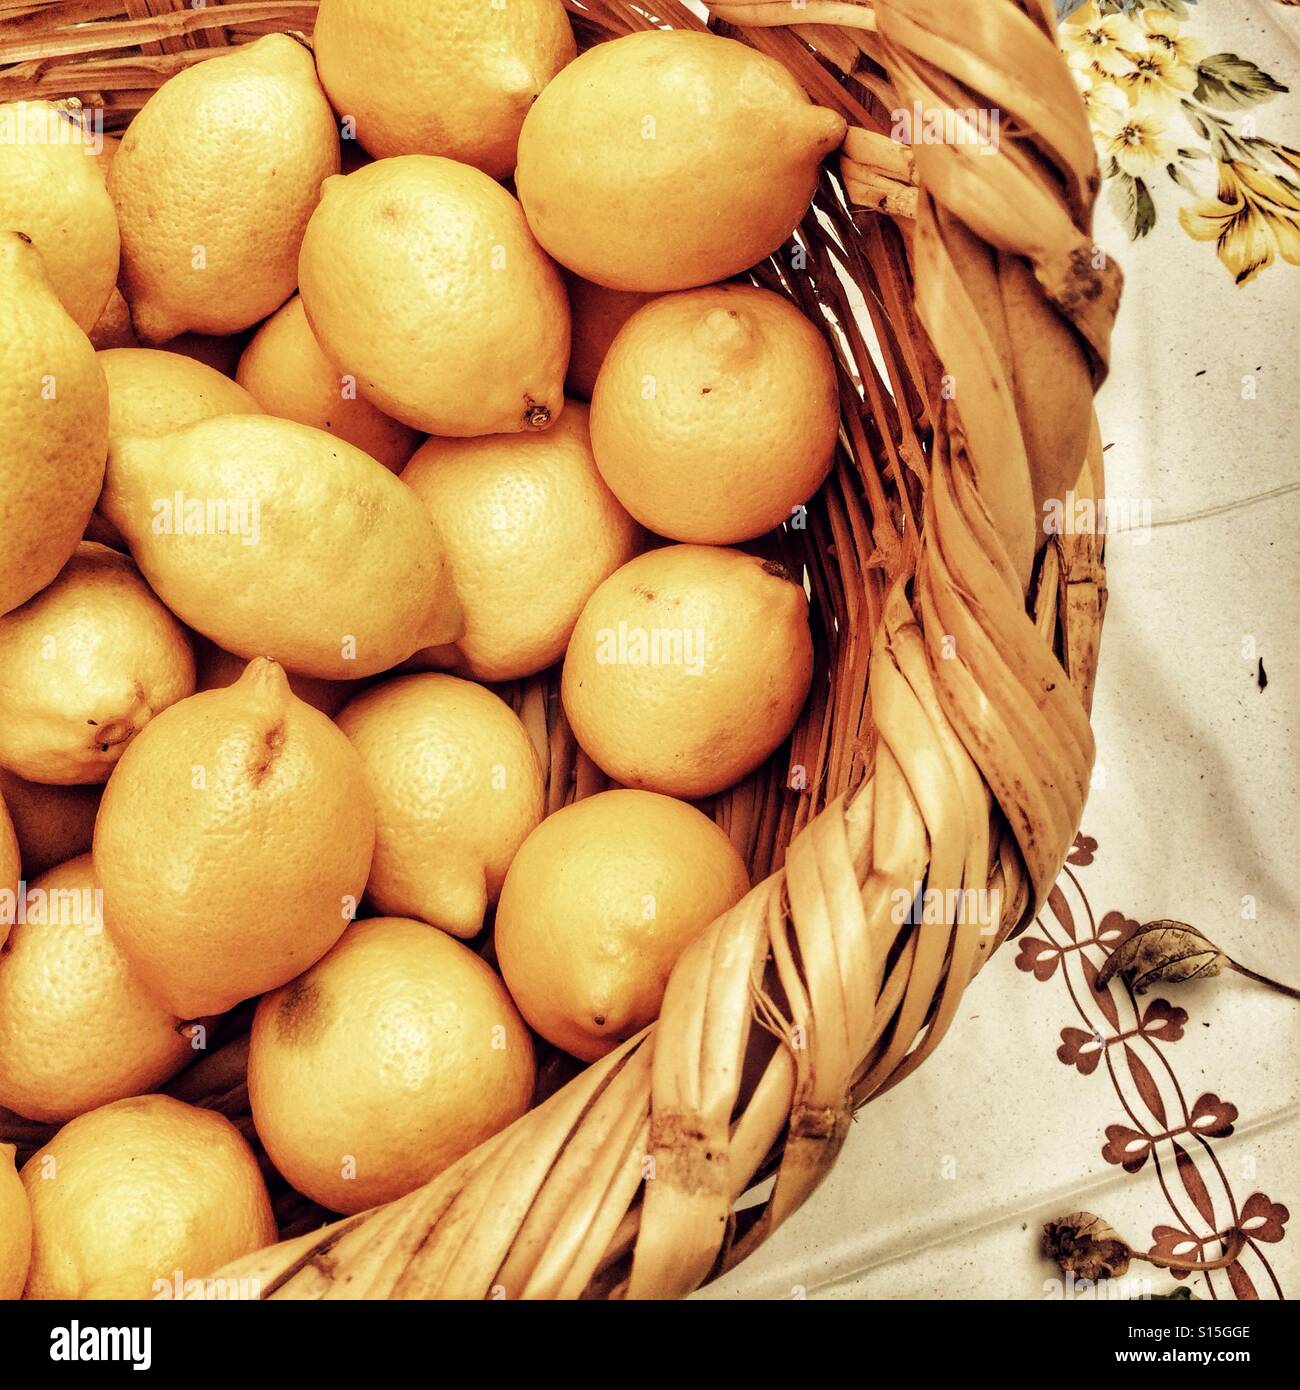 A basket of freshly picked lemons Stock Photo